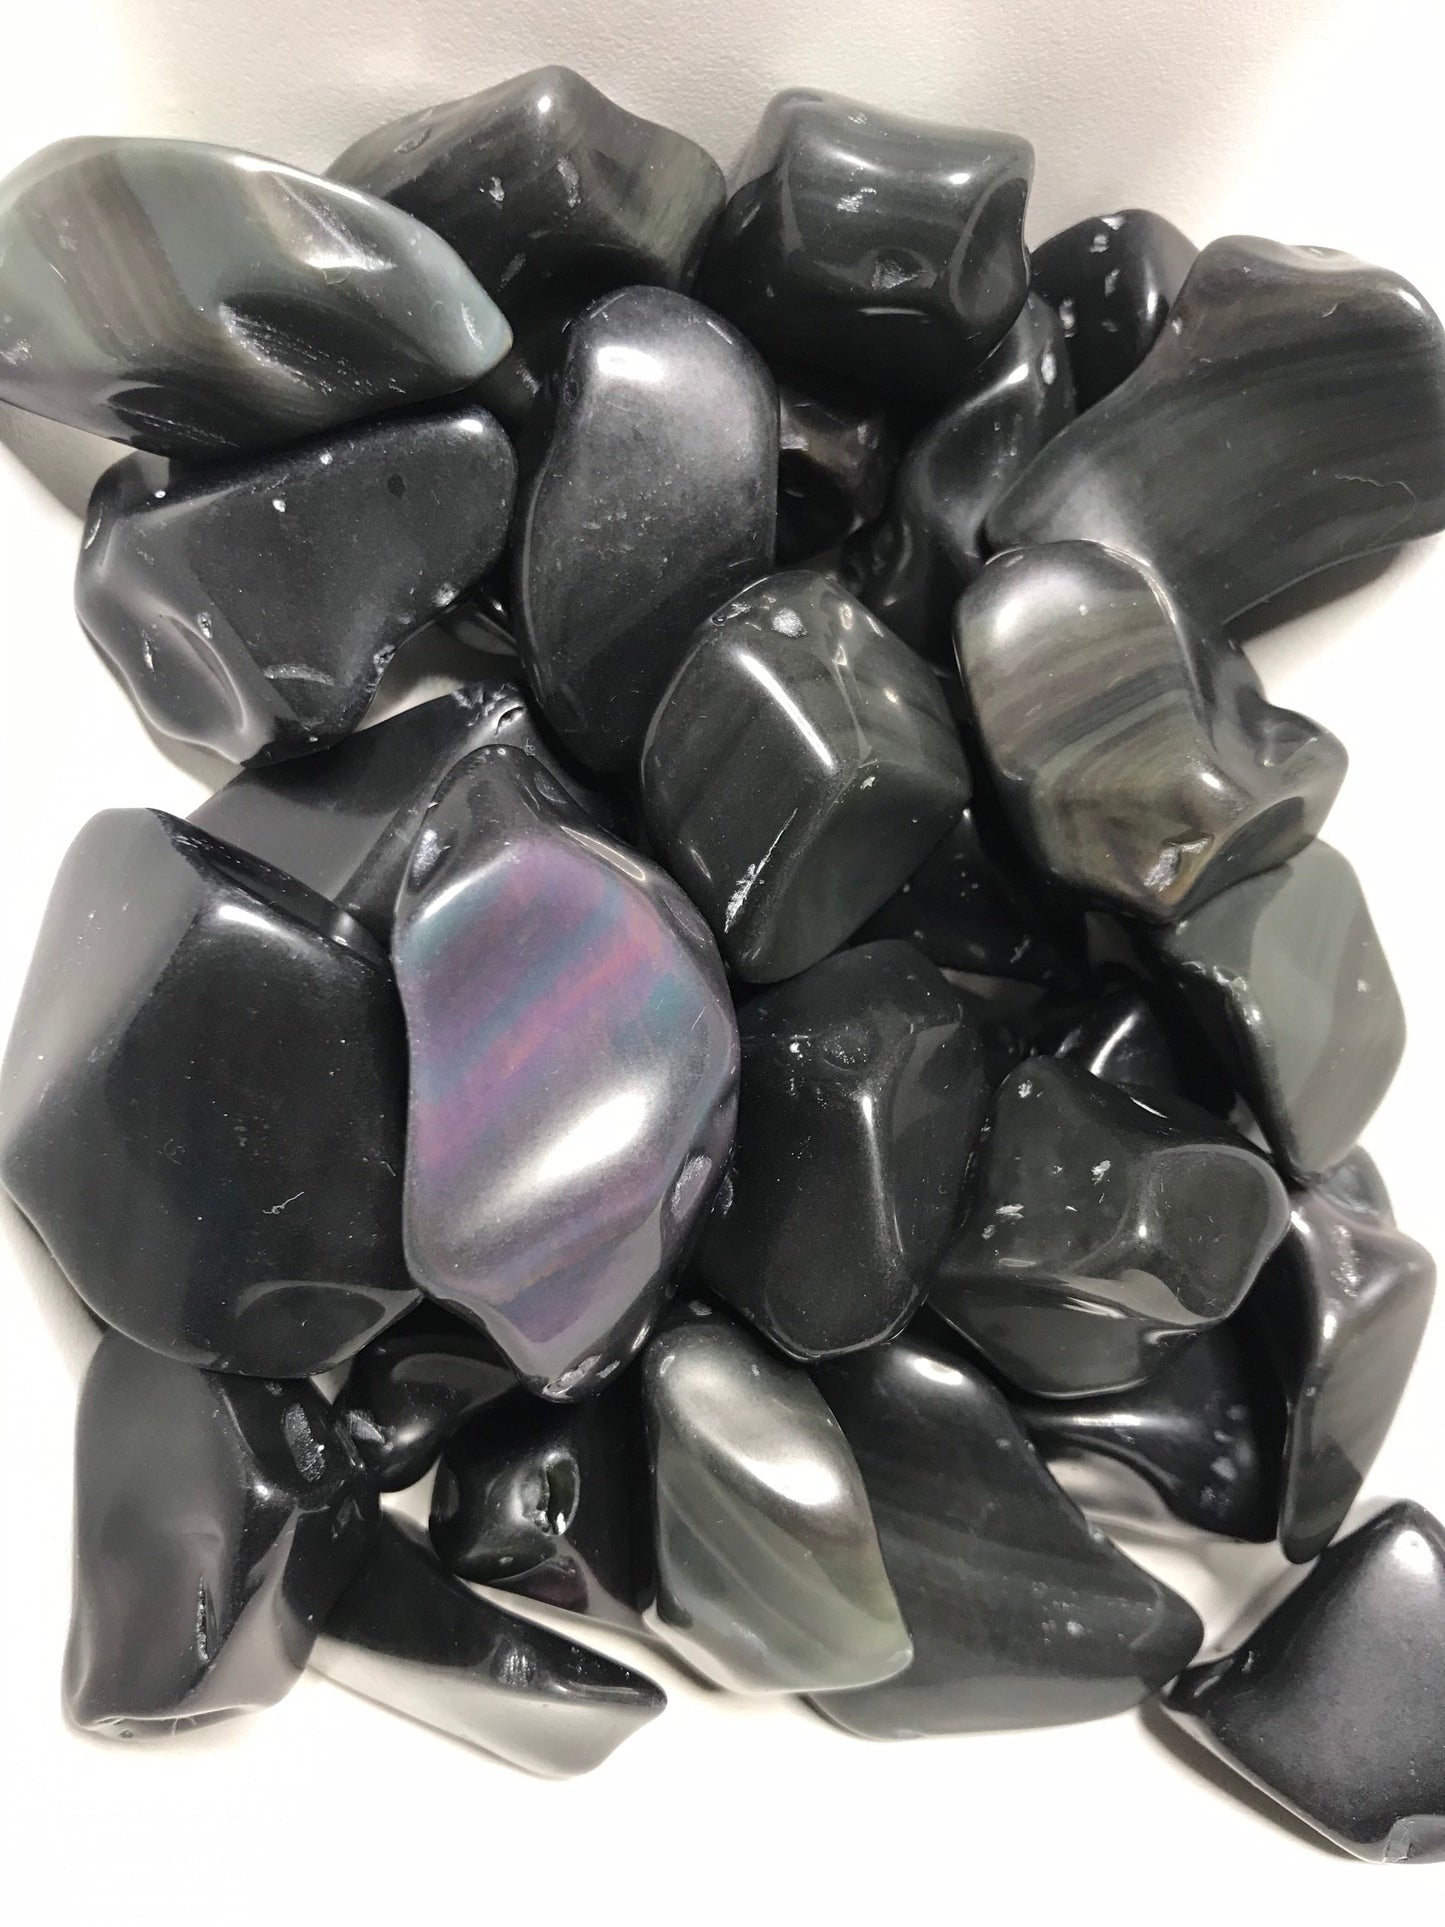 Polished rainbow obsidian, rainbow obsidian tumbles, colorful rocks, colorful obsidian, pretty rocks